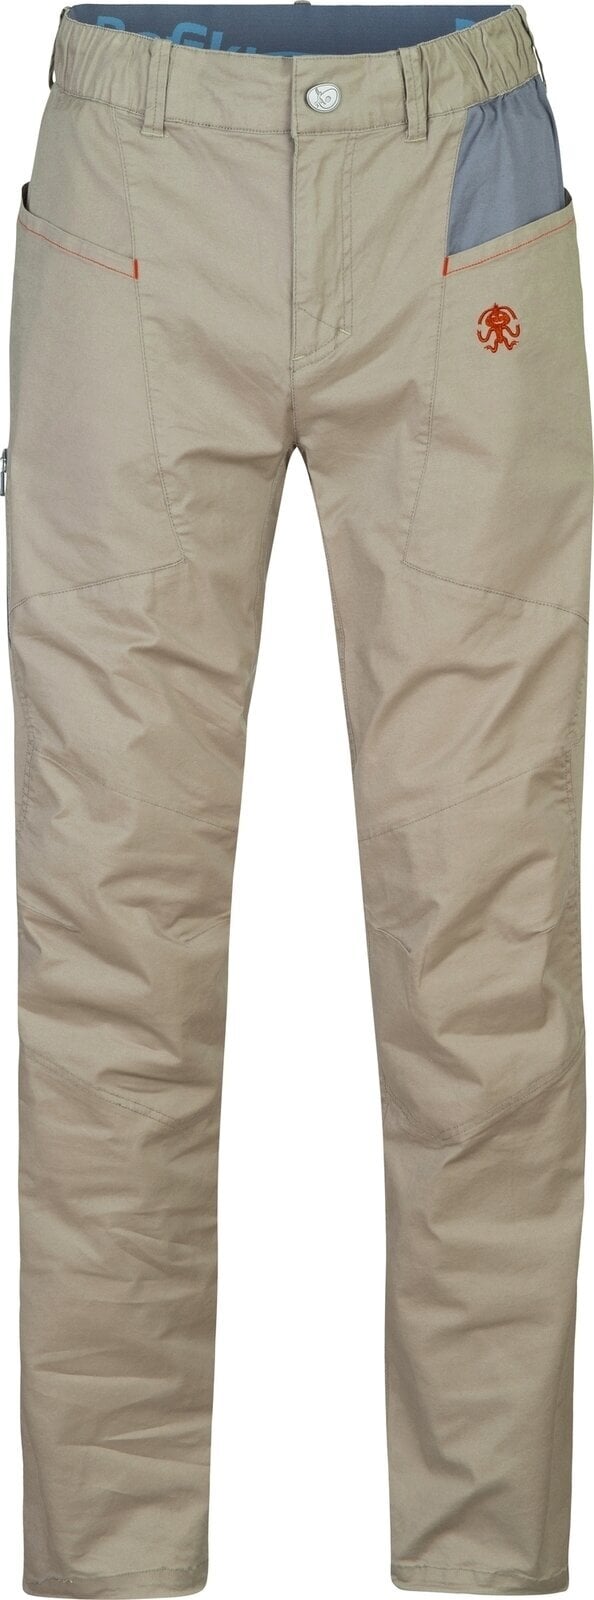 Outdoor Pants Rafiki Crag Man Pants Brindle/Ink M Outdoor Pants